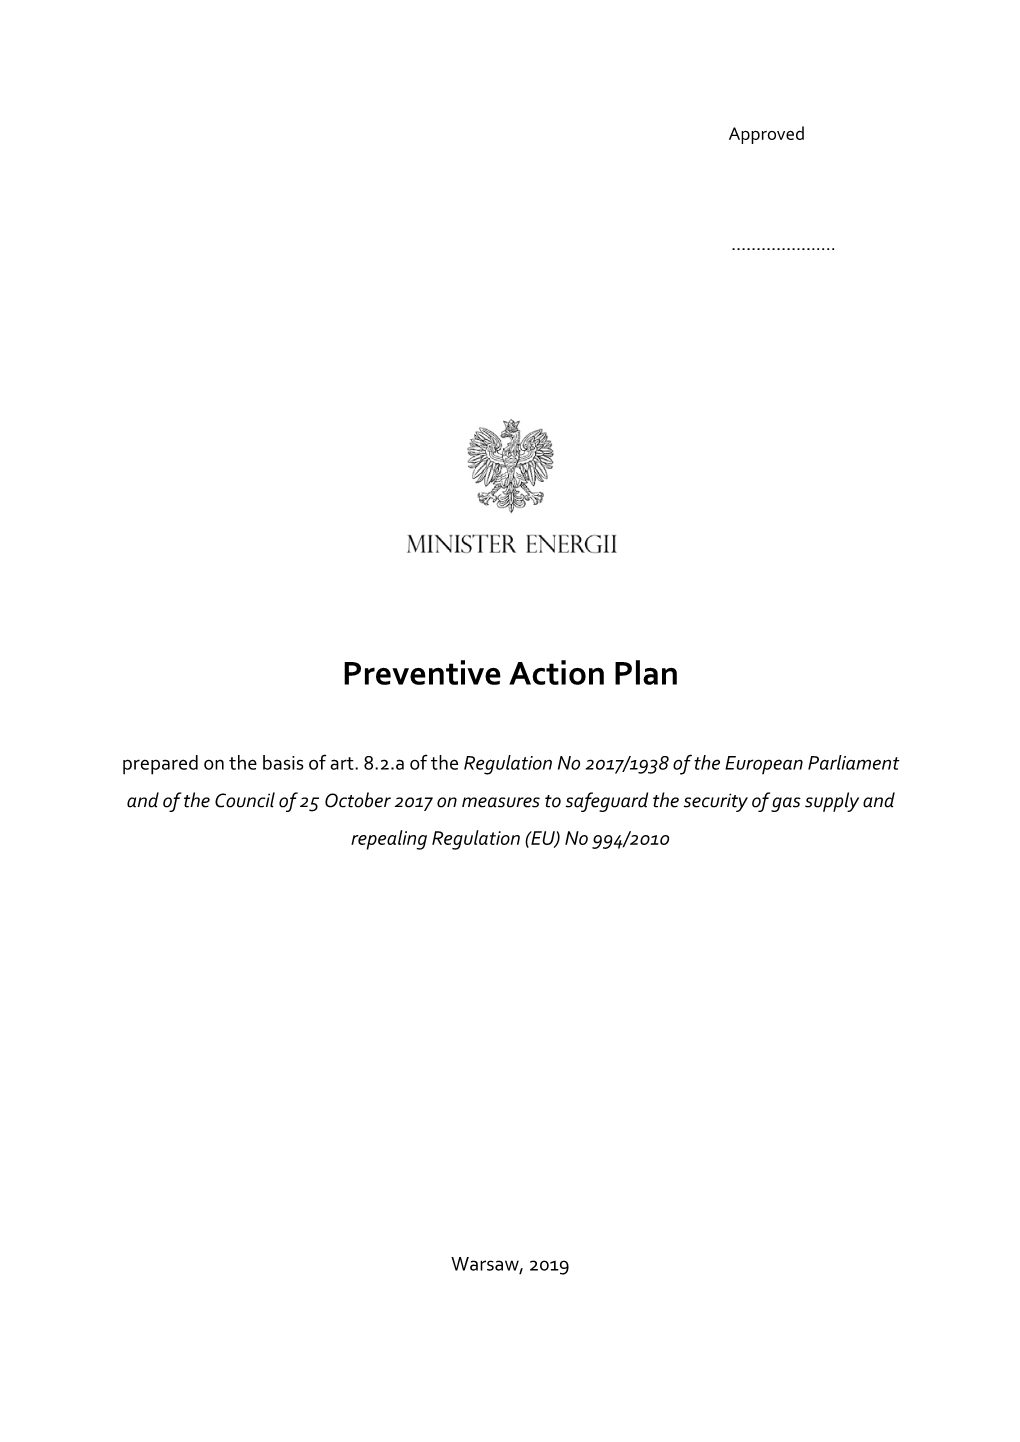 Preventive Action Plan